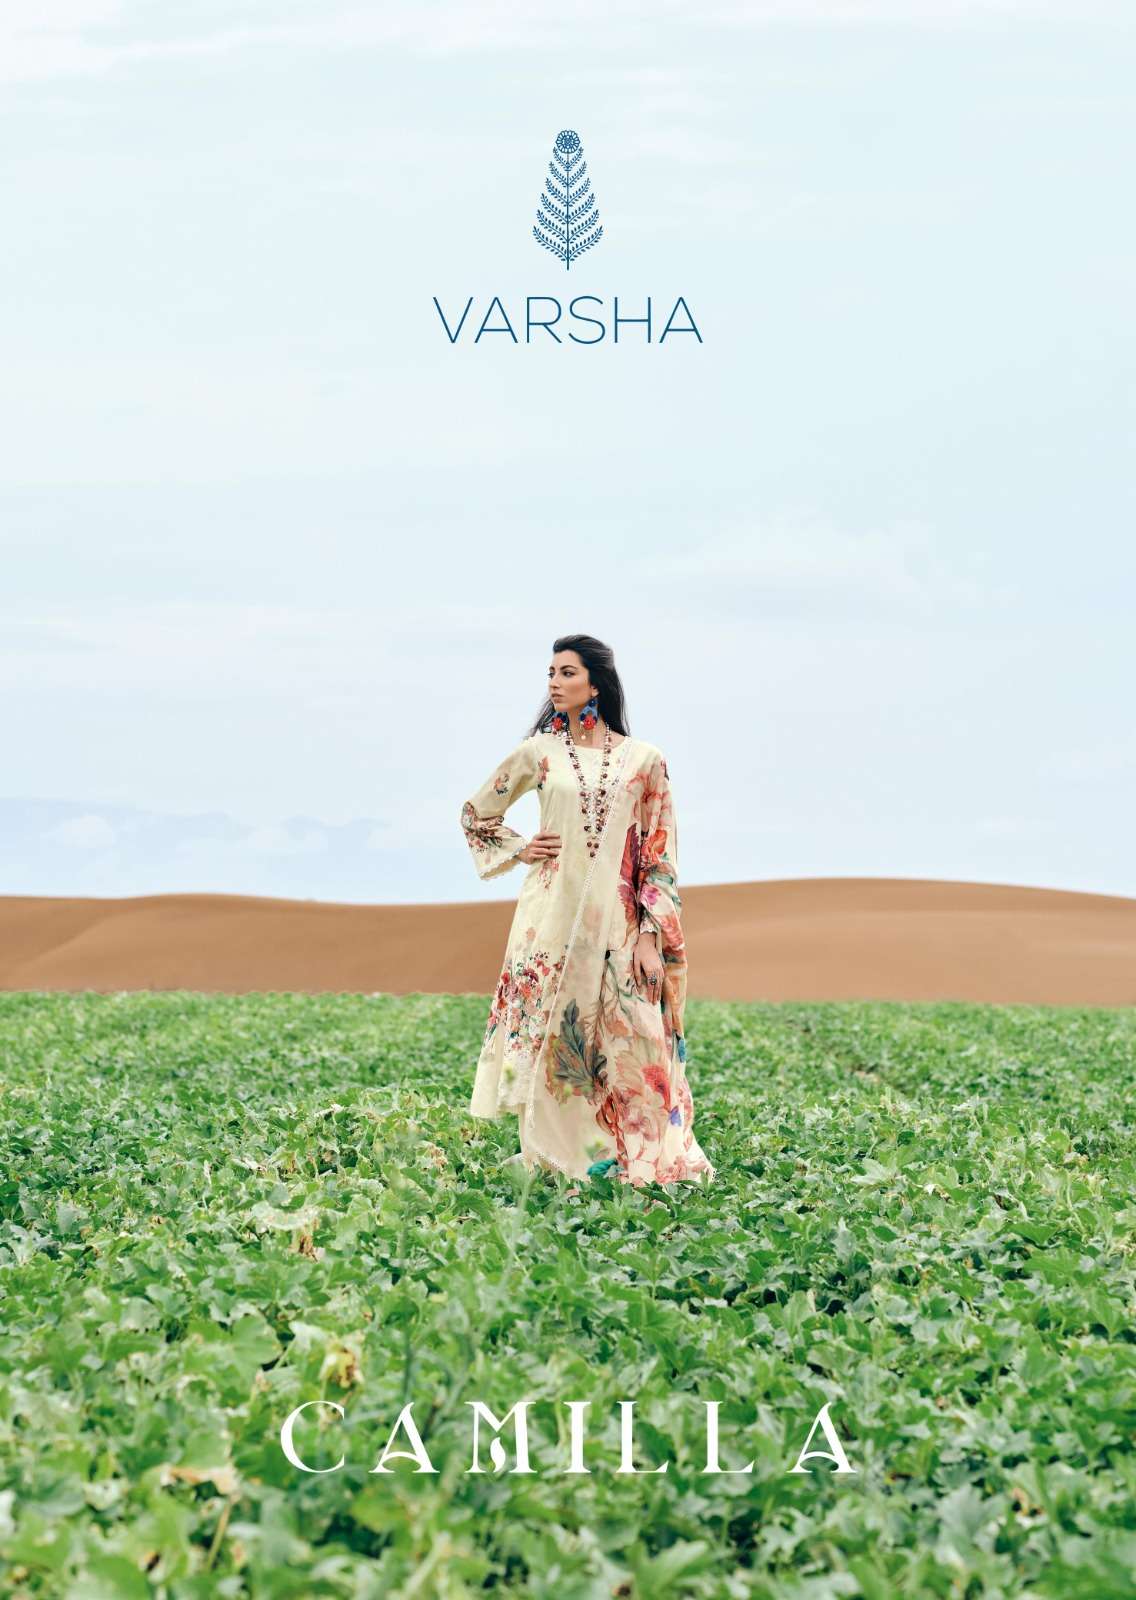 Varsha Camilla Latest Style Cotton Salwar Kameez Catalog Suppliers